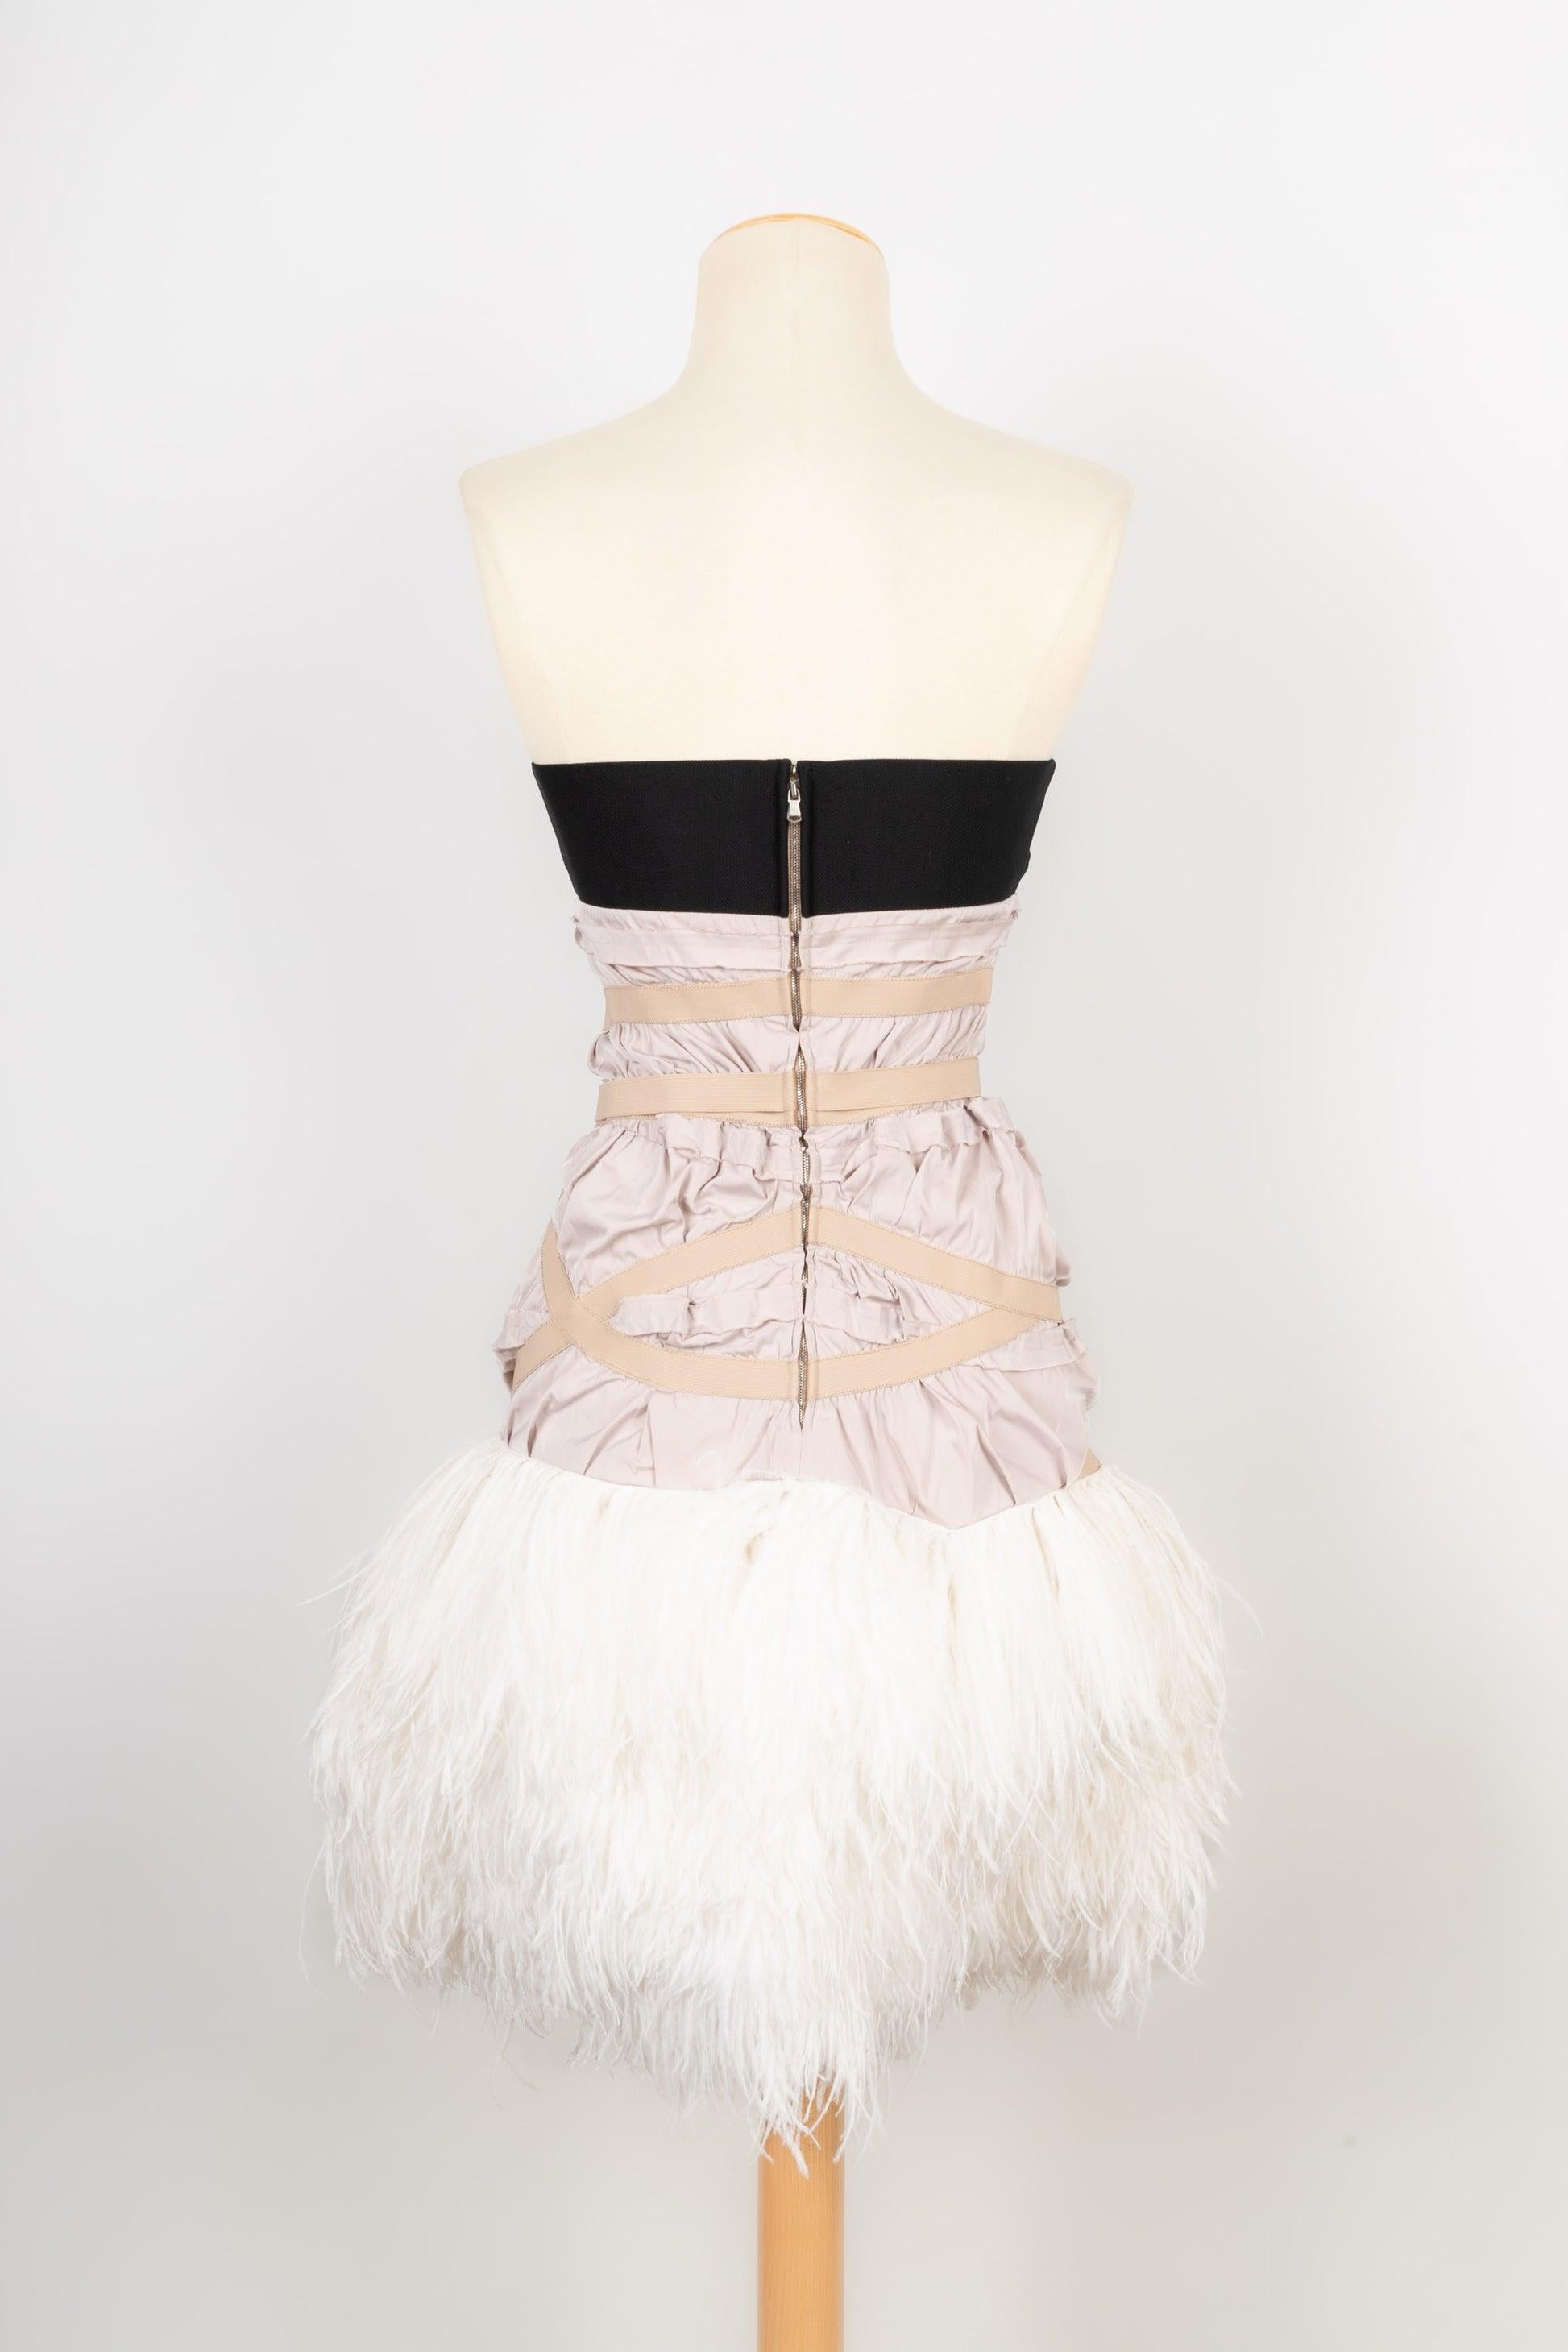 Paule Ka Taffeta and Feather Bustier Dress In Excellent Condition For Sale In SAINT-OUEN-SUR-SEINE, FR